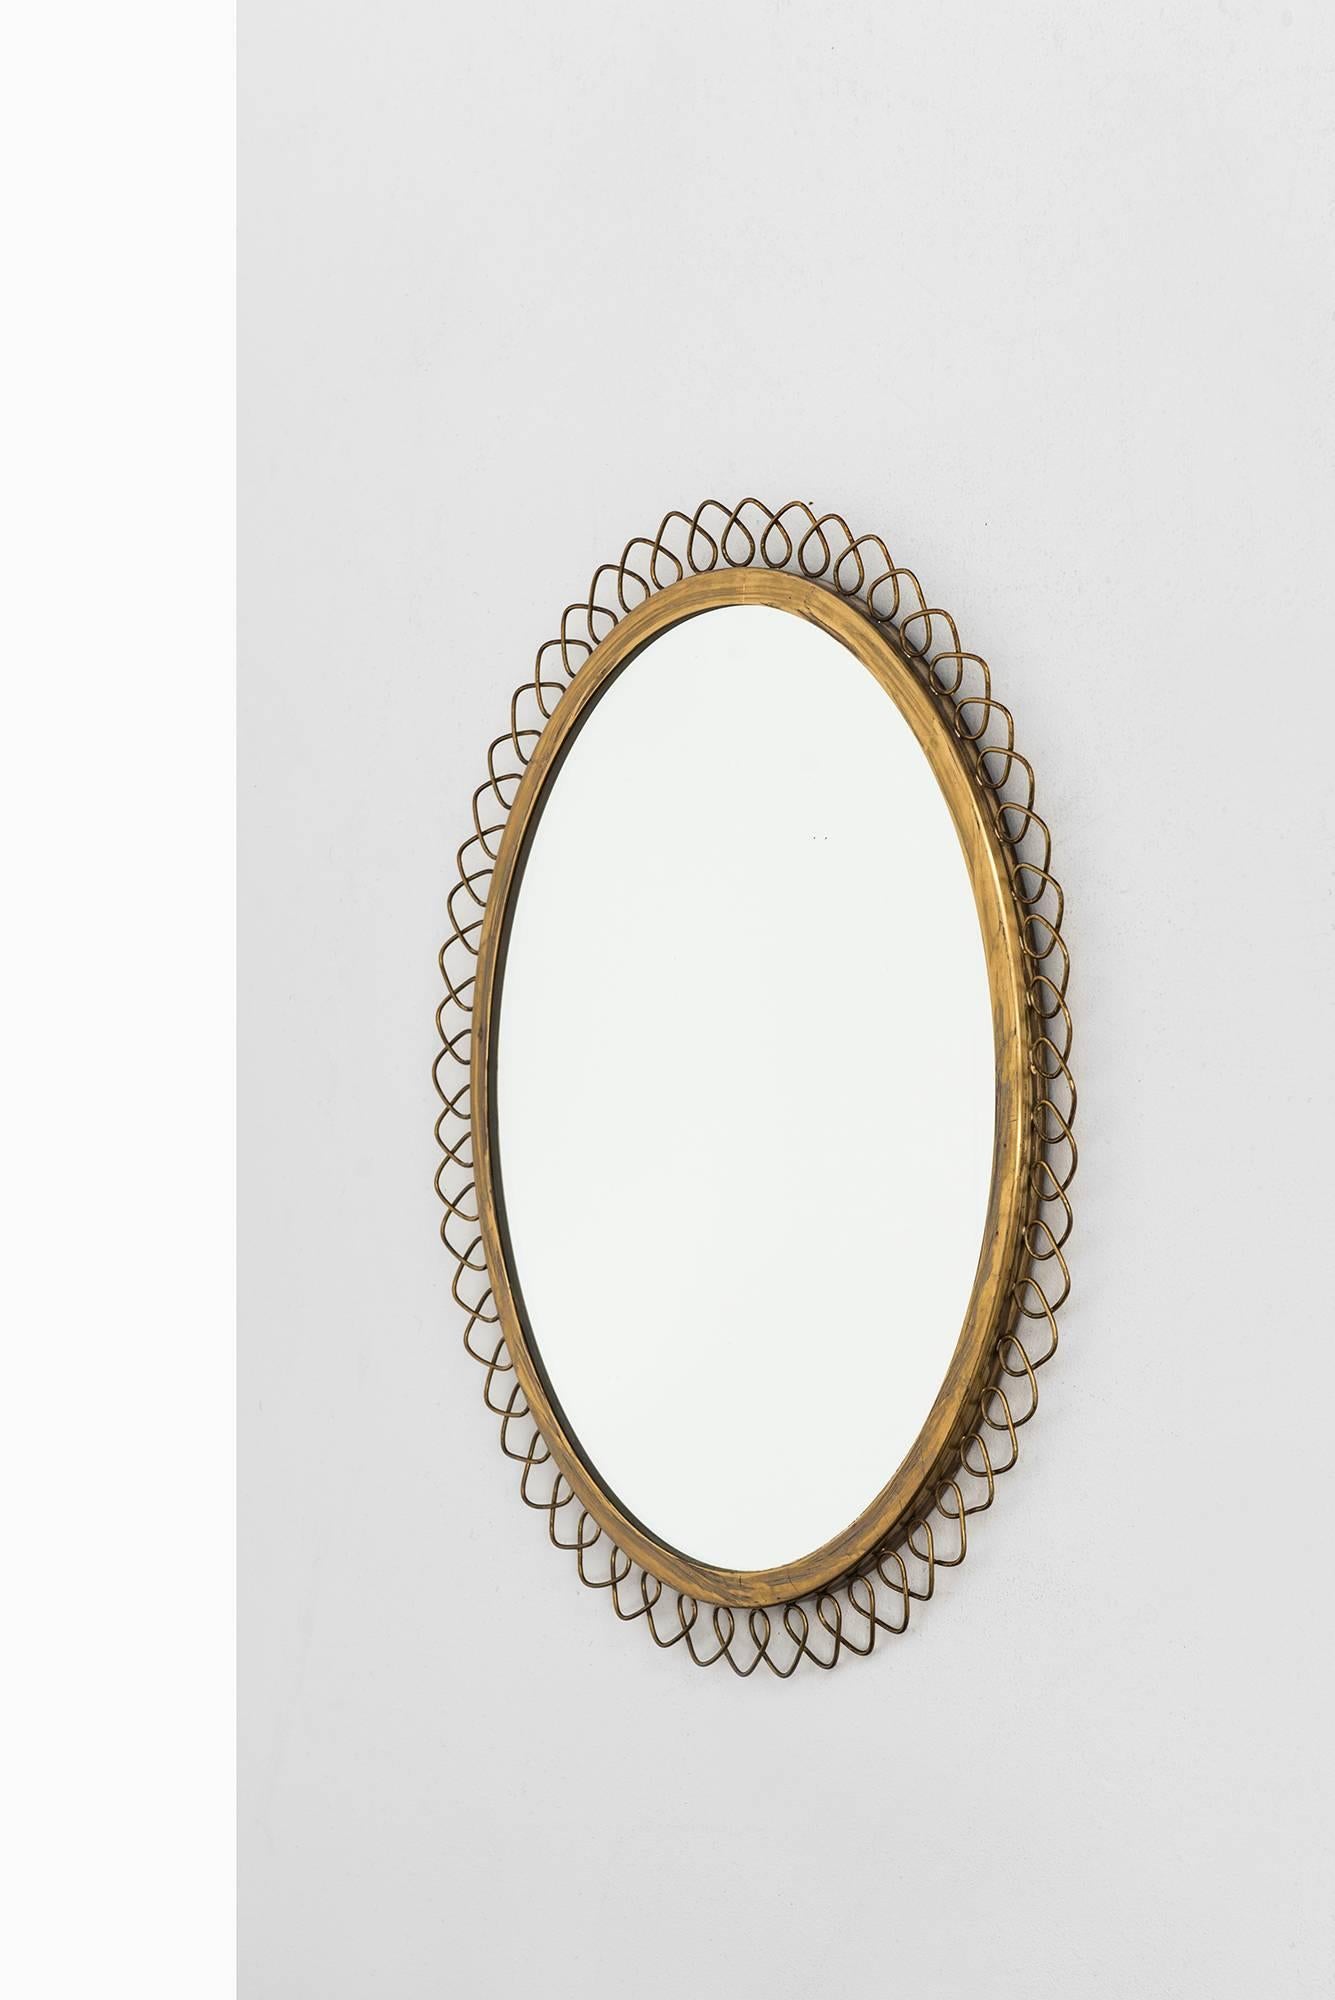 Mirror in brass in the manner of Josef Frank.